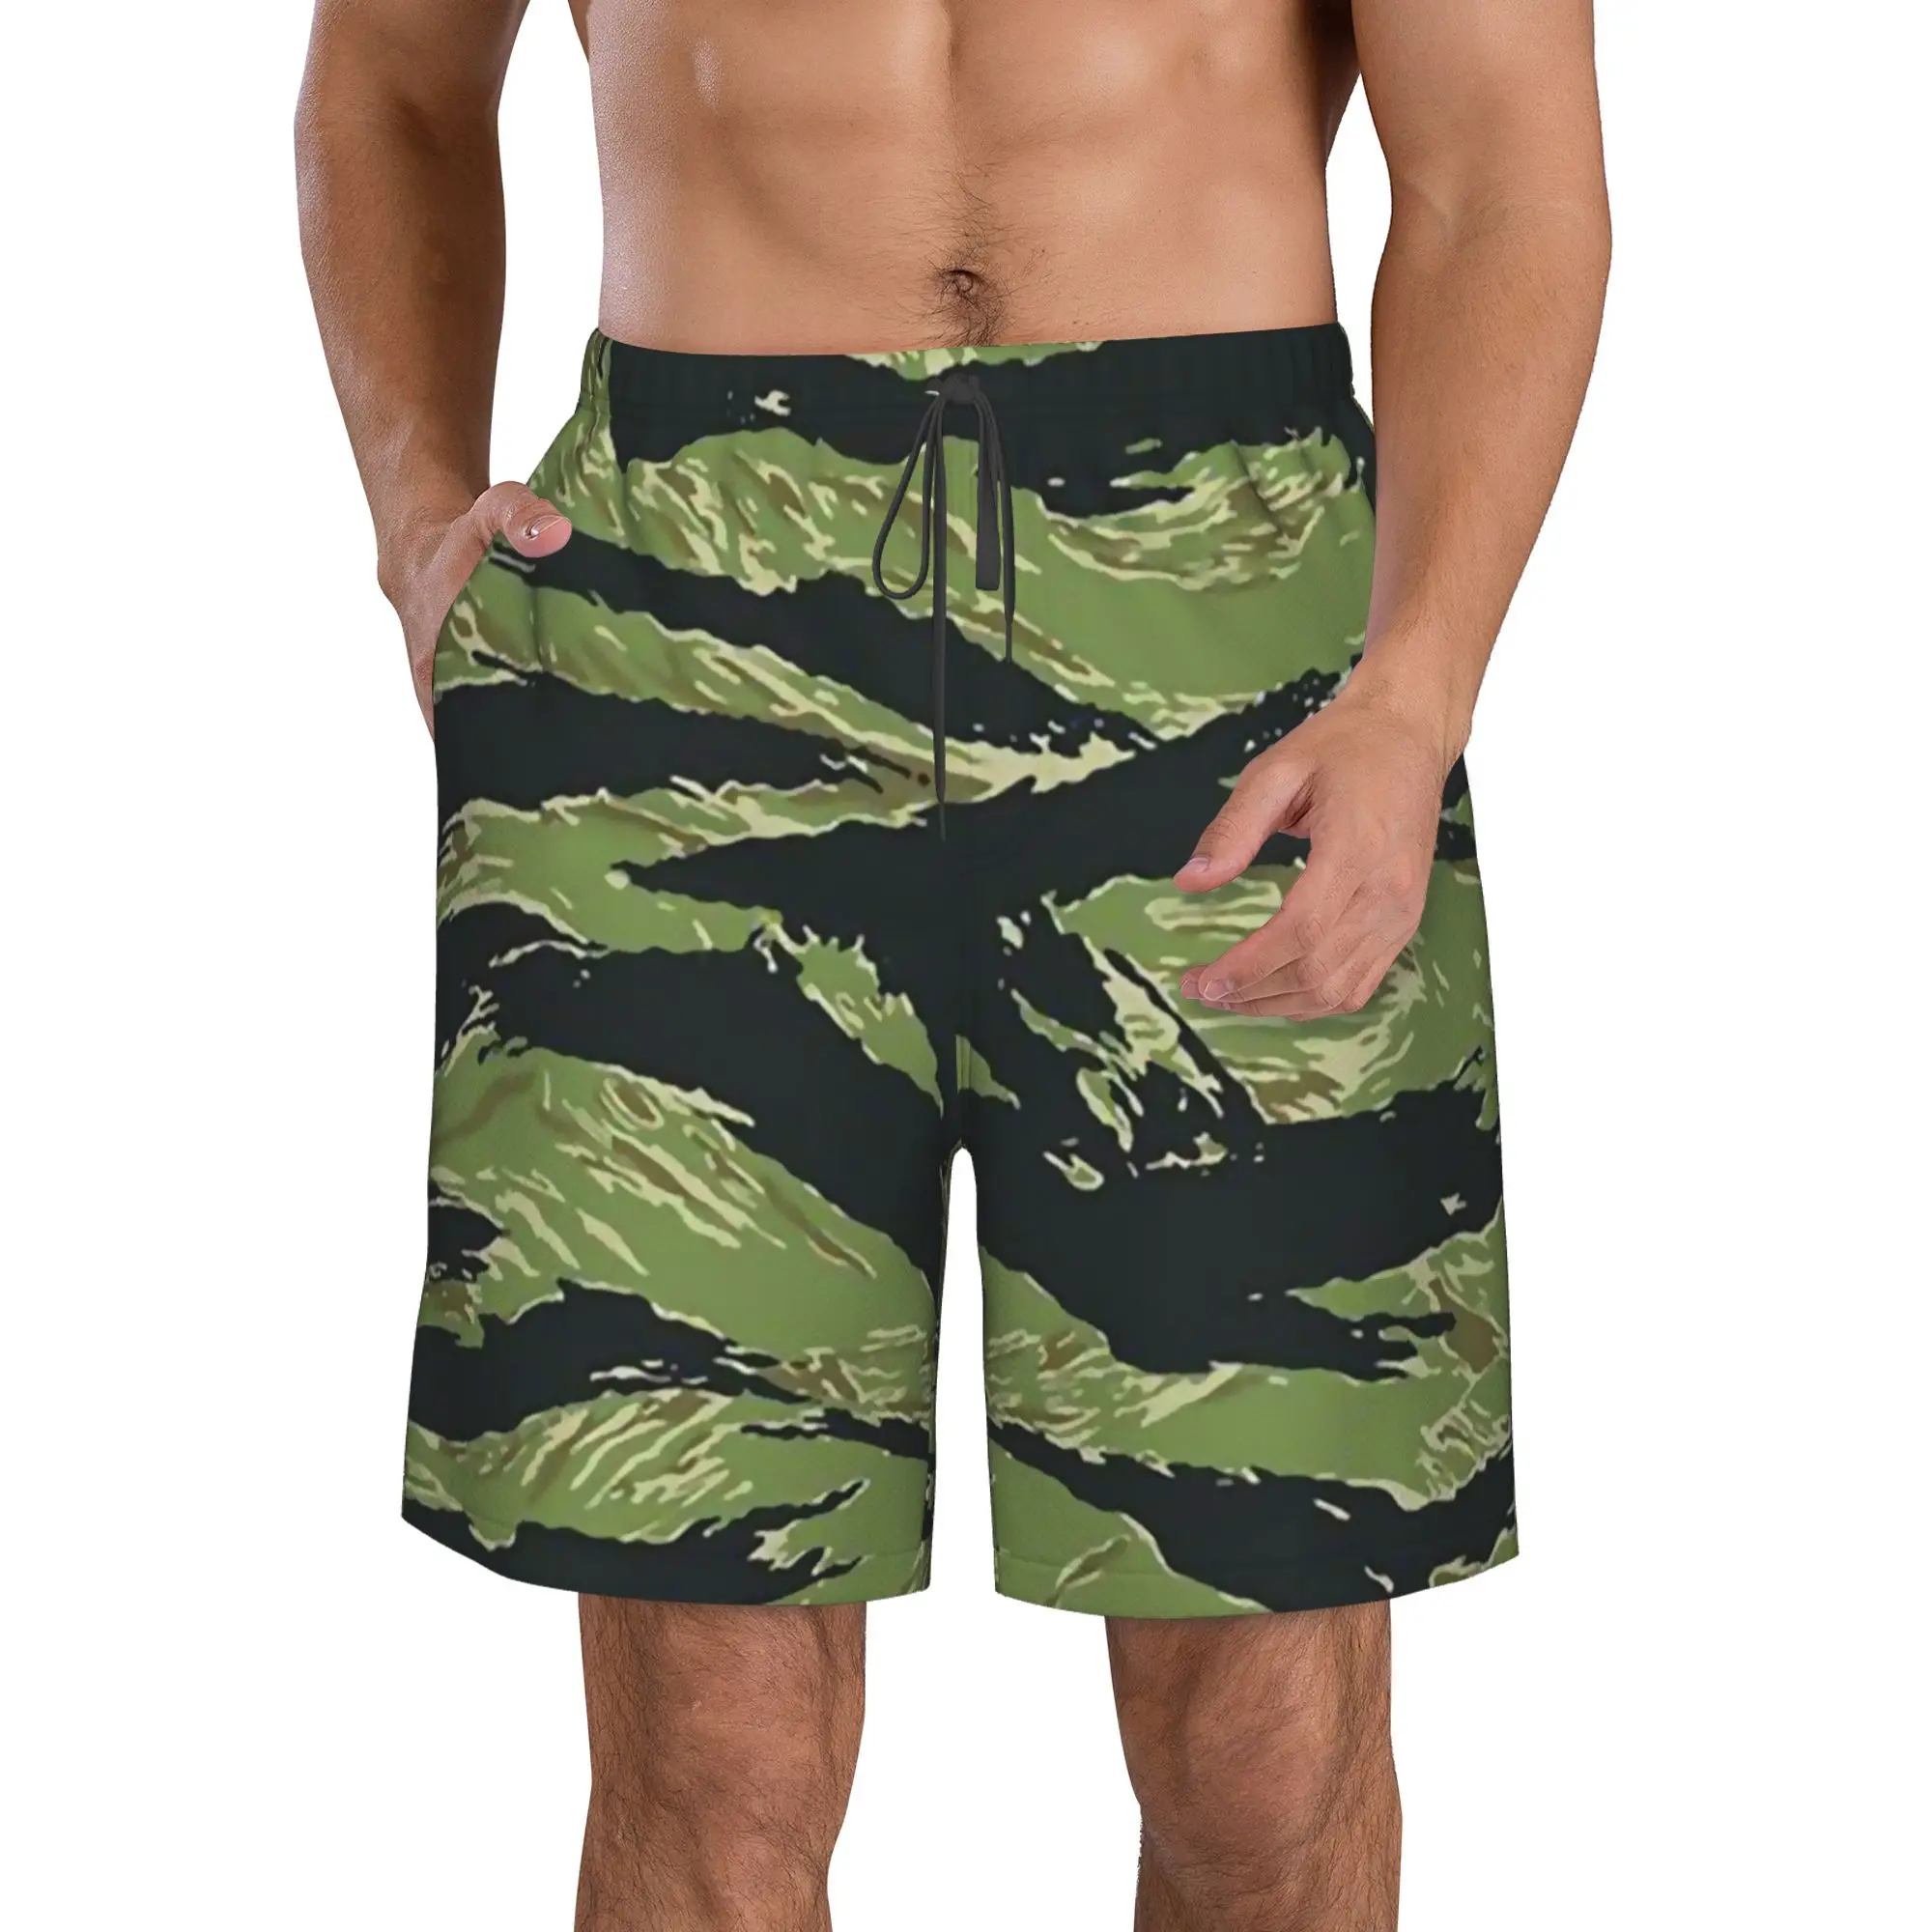 

Tiger Stripe Camo Men's printing Swim Trunks Quick Dry Drawstring Waist Beach Swim Trunks Board Shorts with Mesh Lining